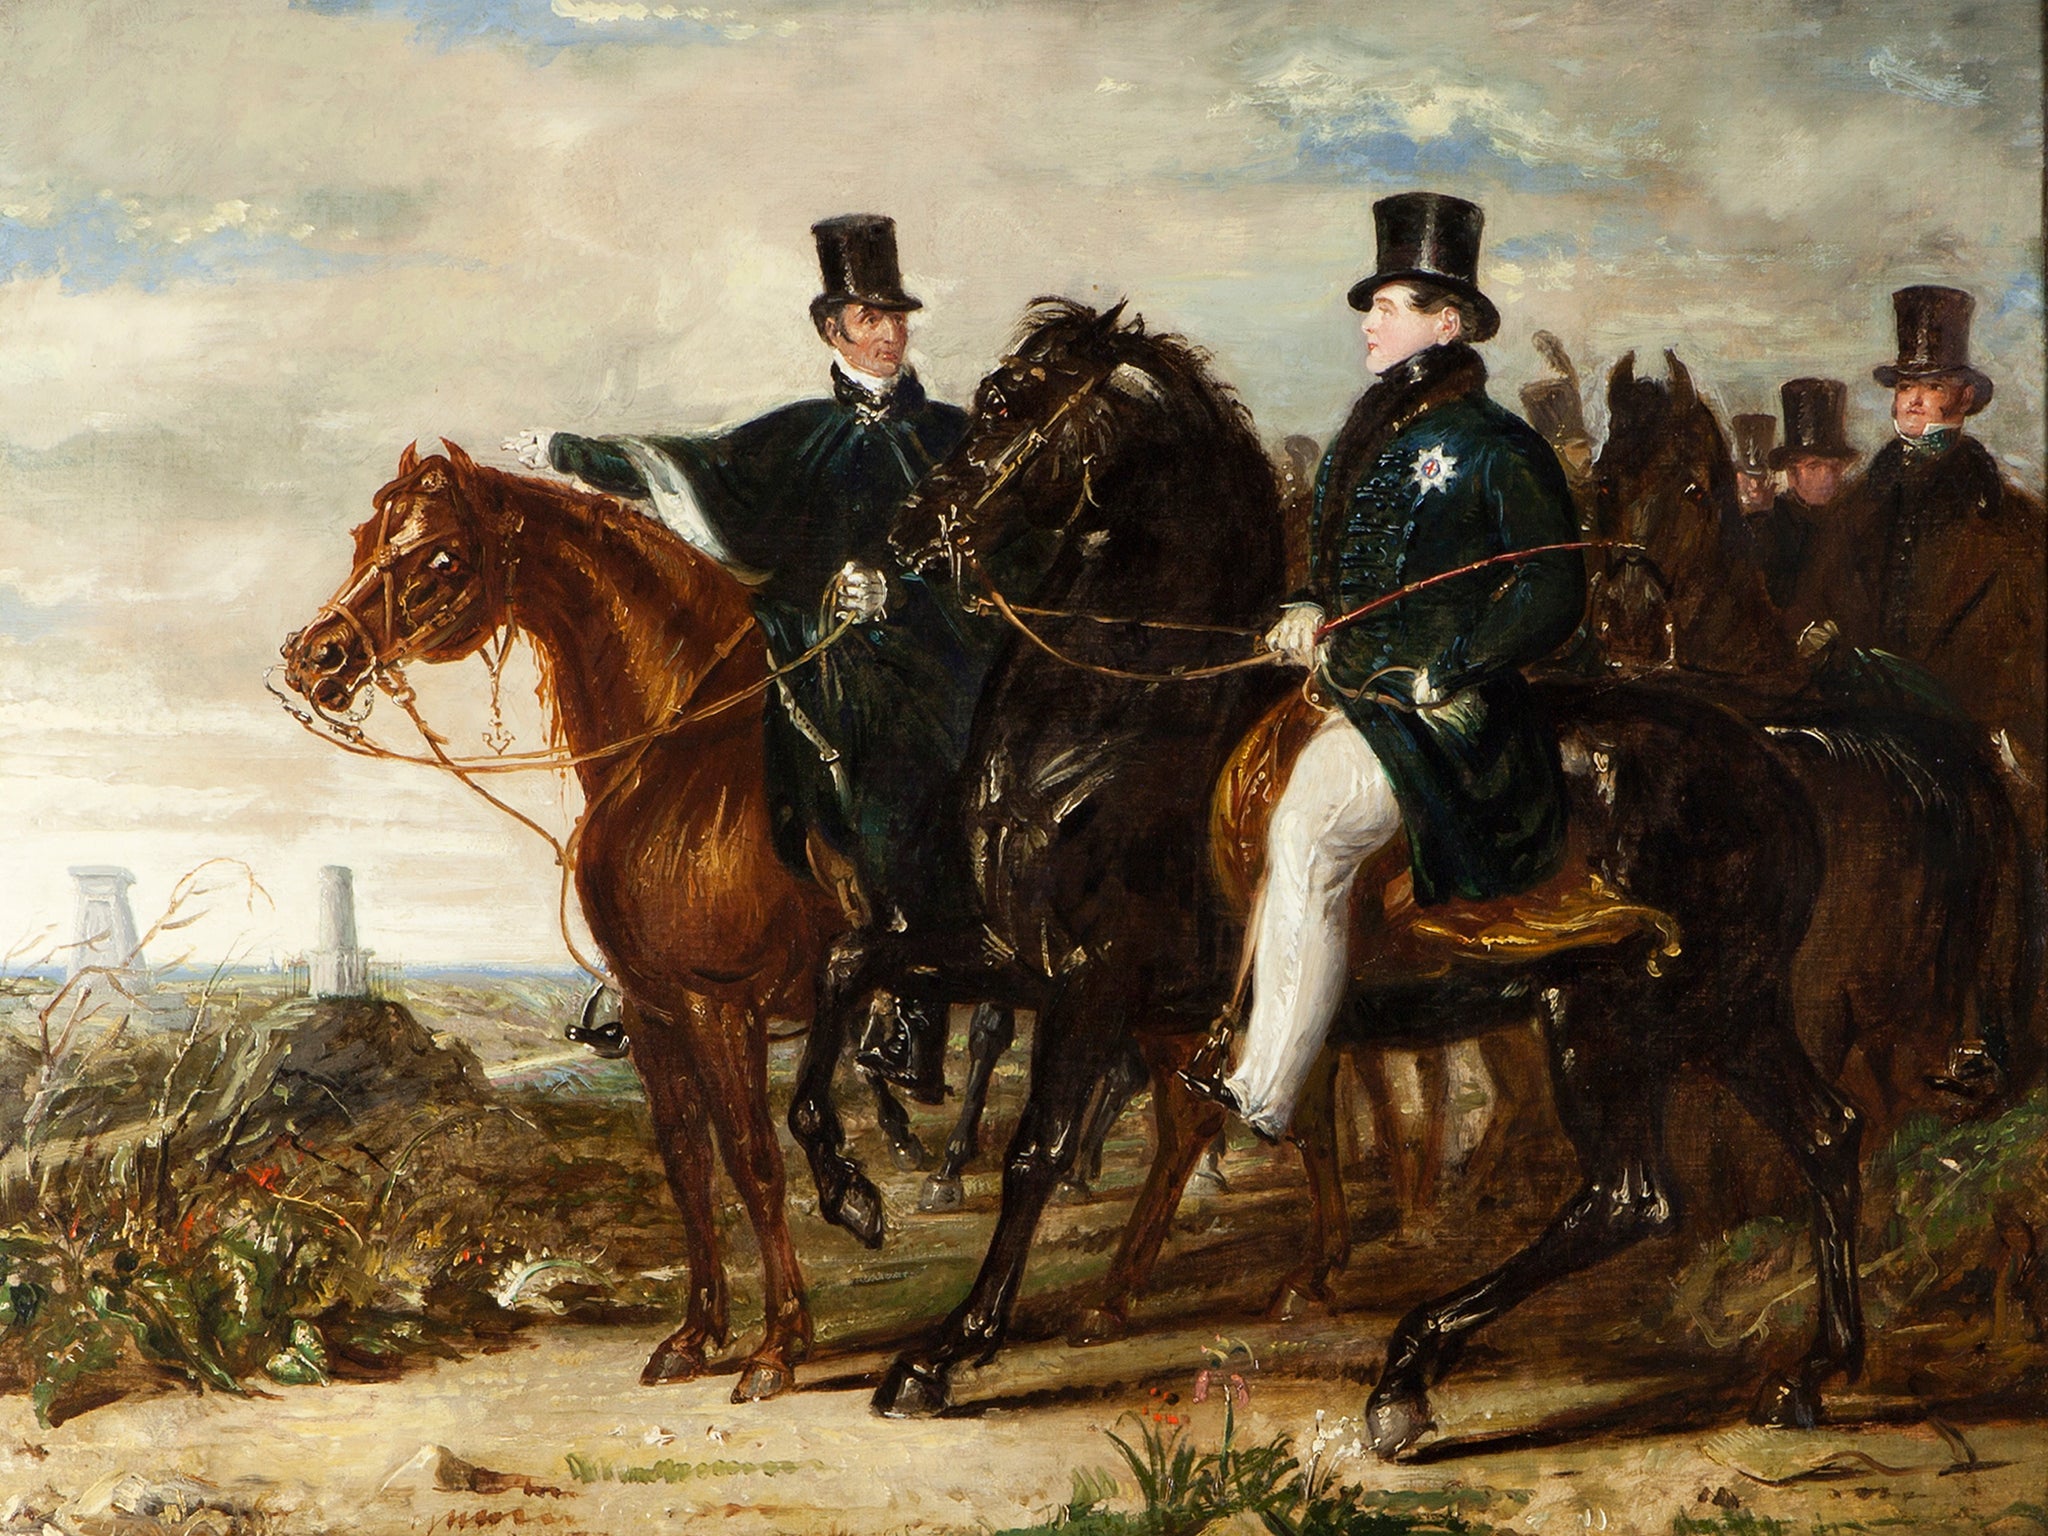 The Duke of Wellington showing the Prince Regent (later George IV) the battlefield of Waterloo by Benjamin Robert Haydon c. 1844